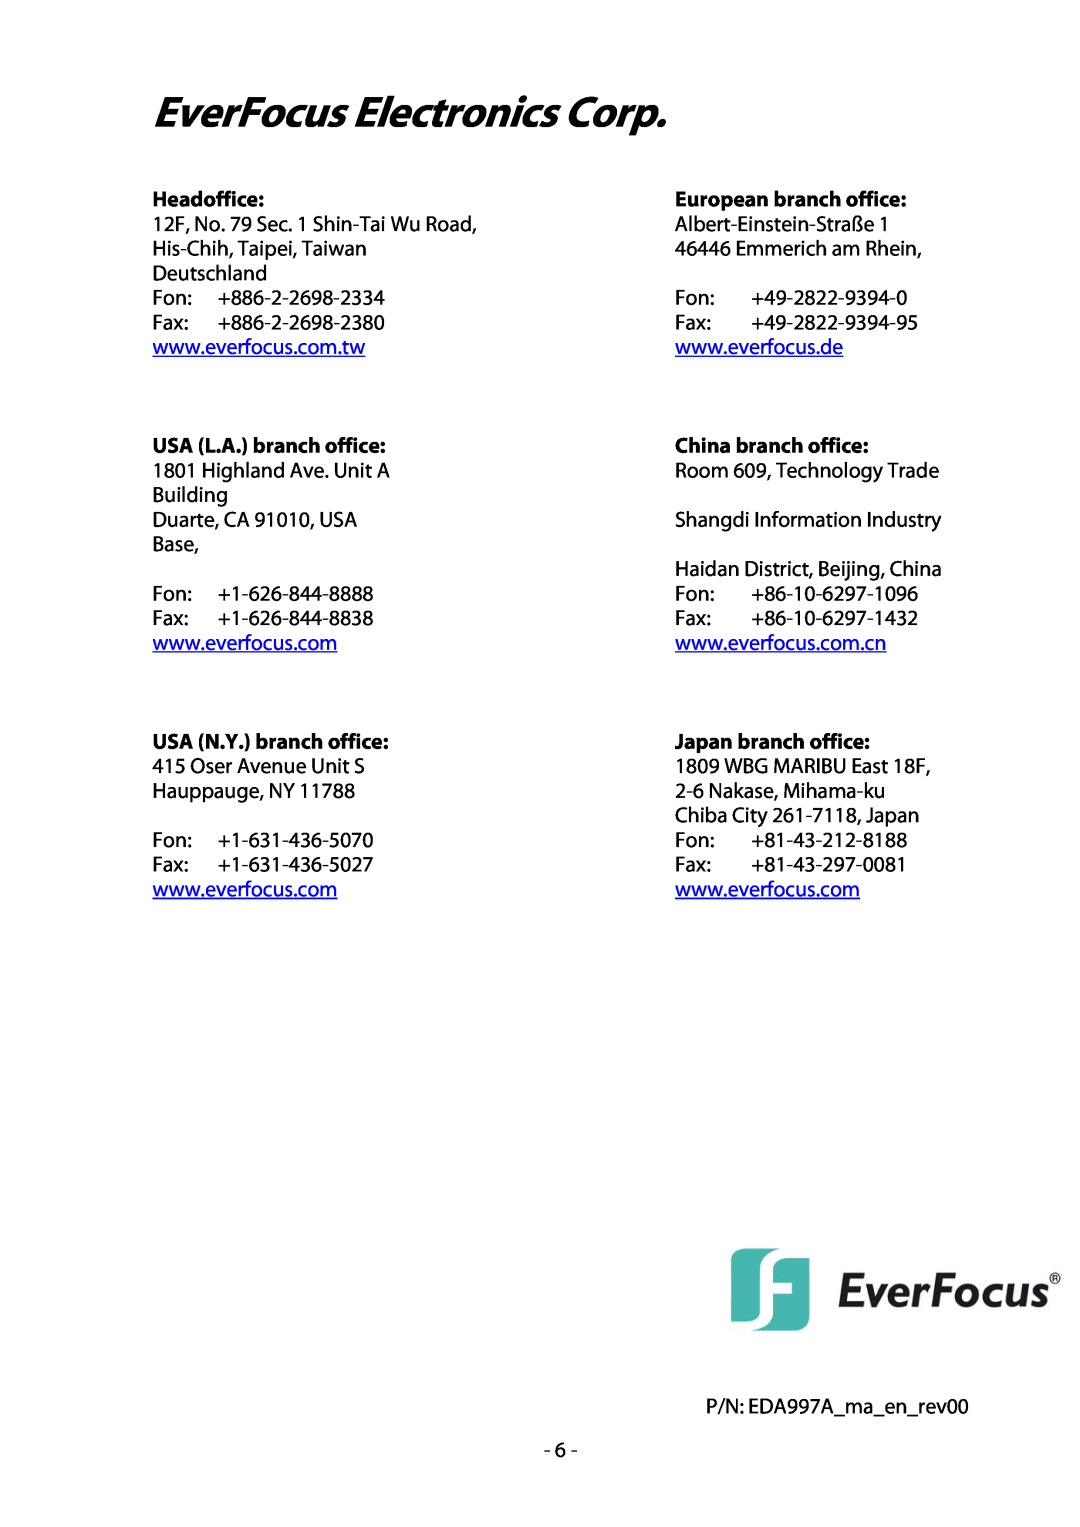 EverFocus EDA997A Headoffice, USA L.A. branch office, China branch office, Japan branch office, EverFocus Electronics Corp 